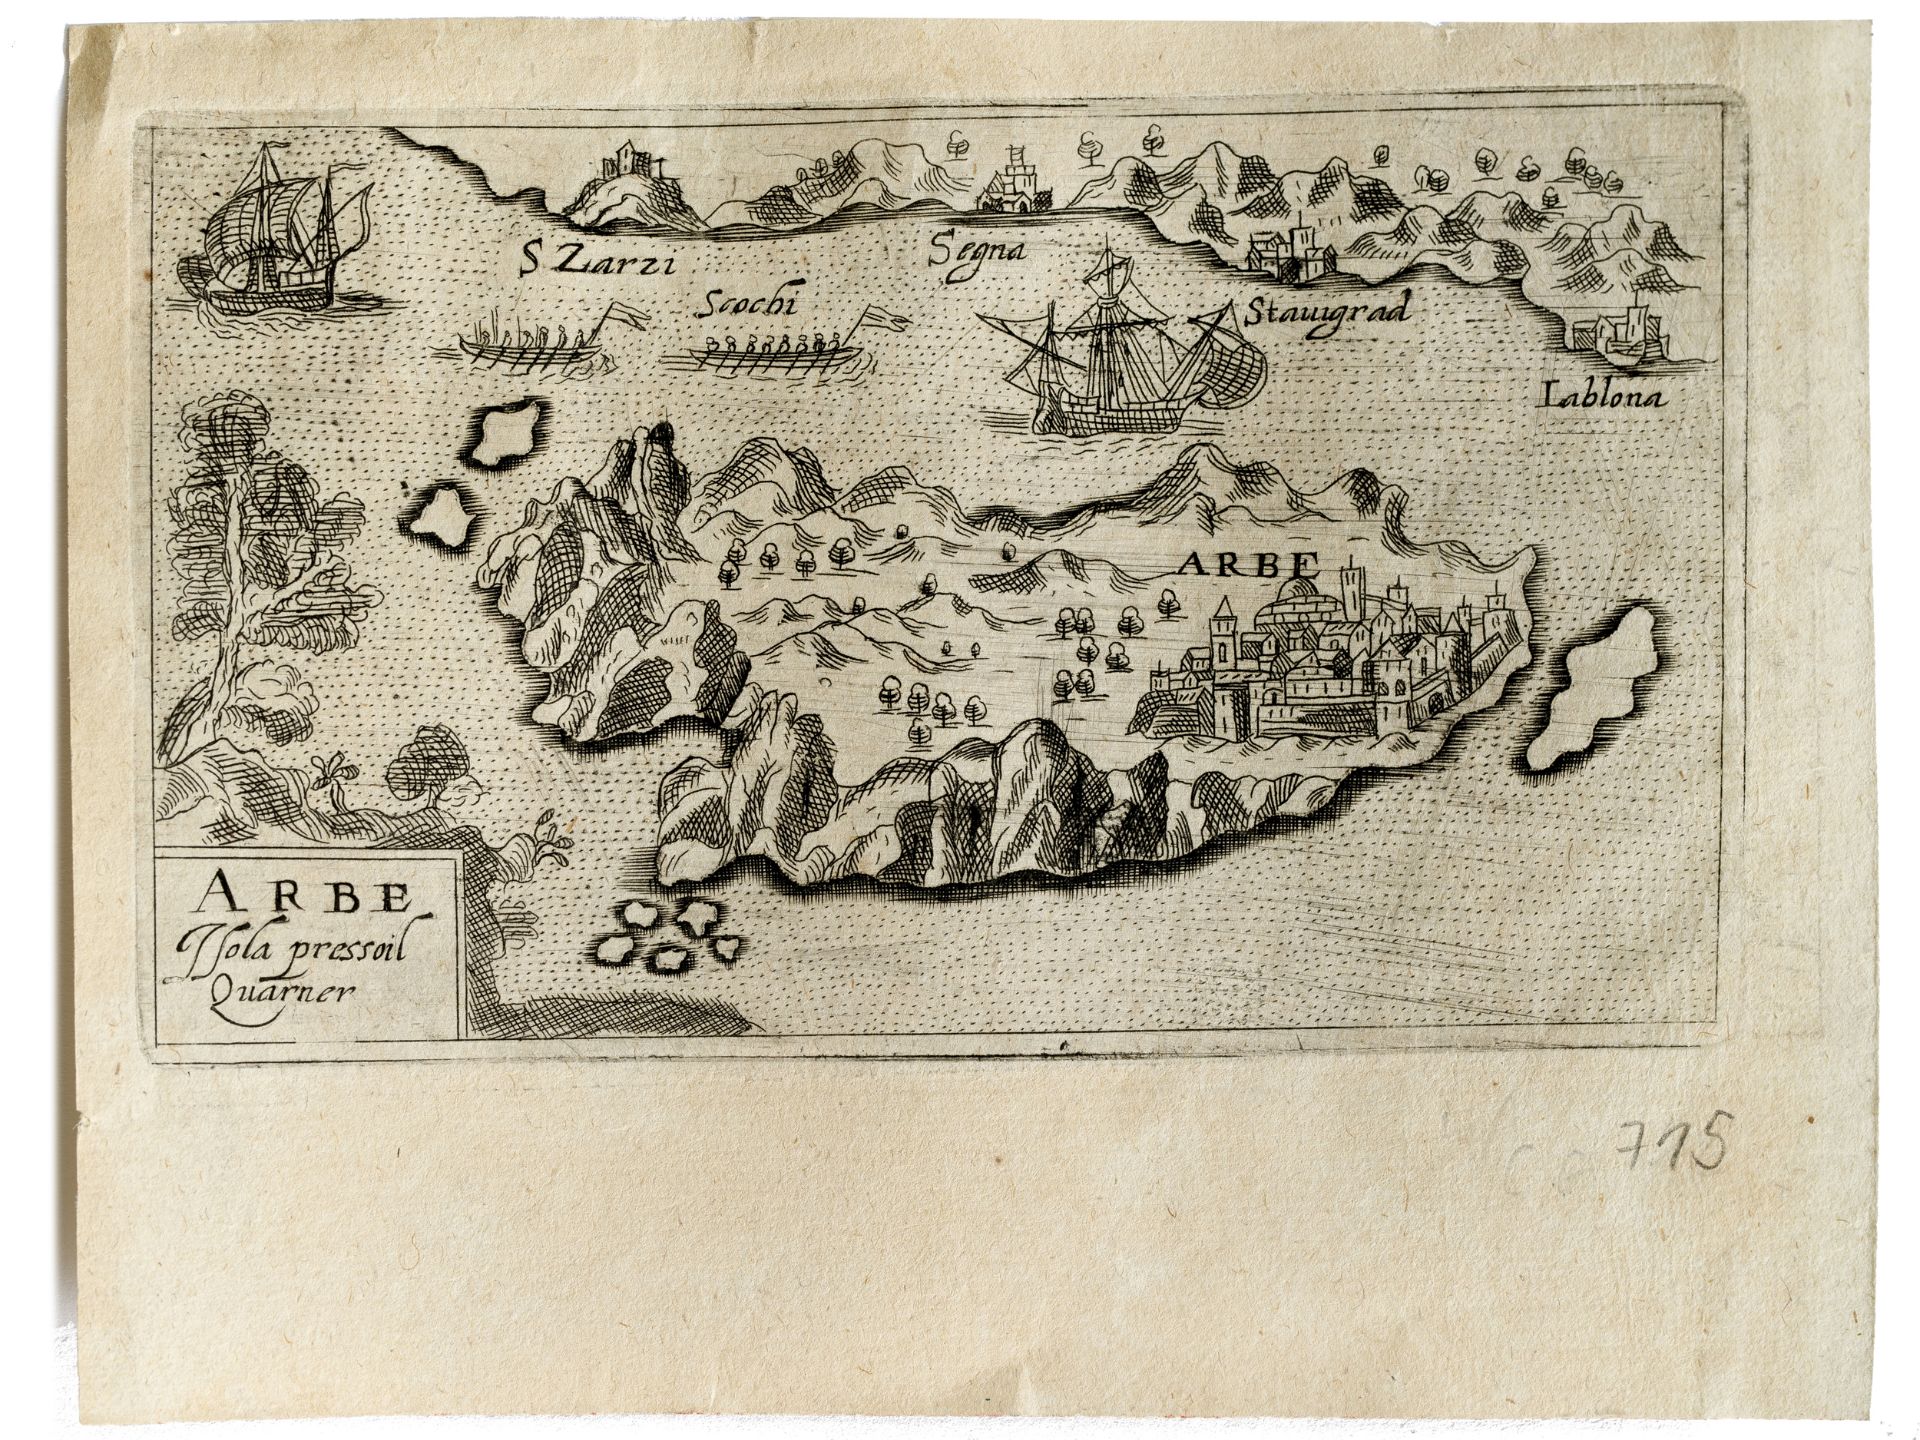 "Arbe. Isola pressoil Quarner", Navigation map, From: Johannes Metellus